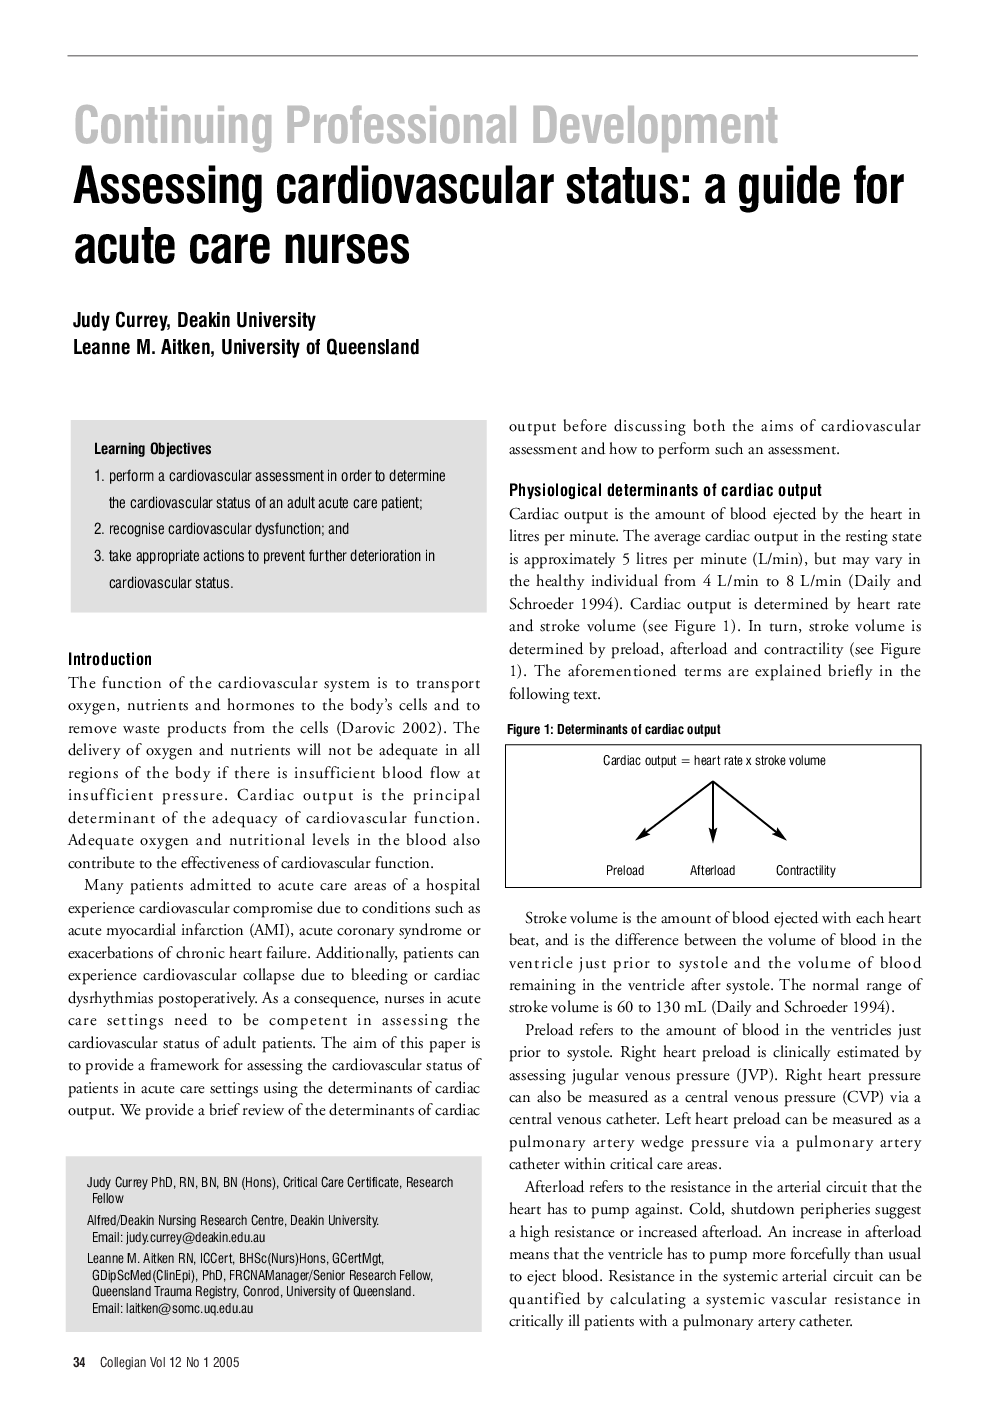 Assessing cardiovascular status: a guide for acute care nurses